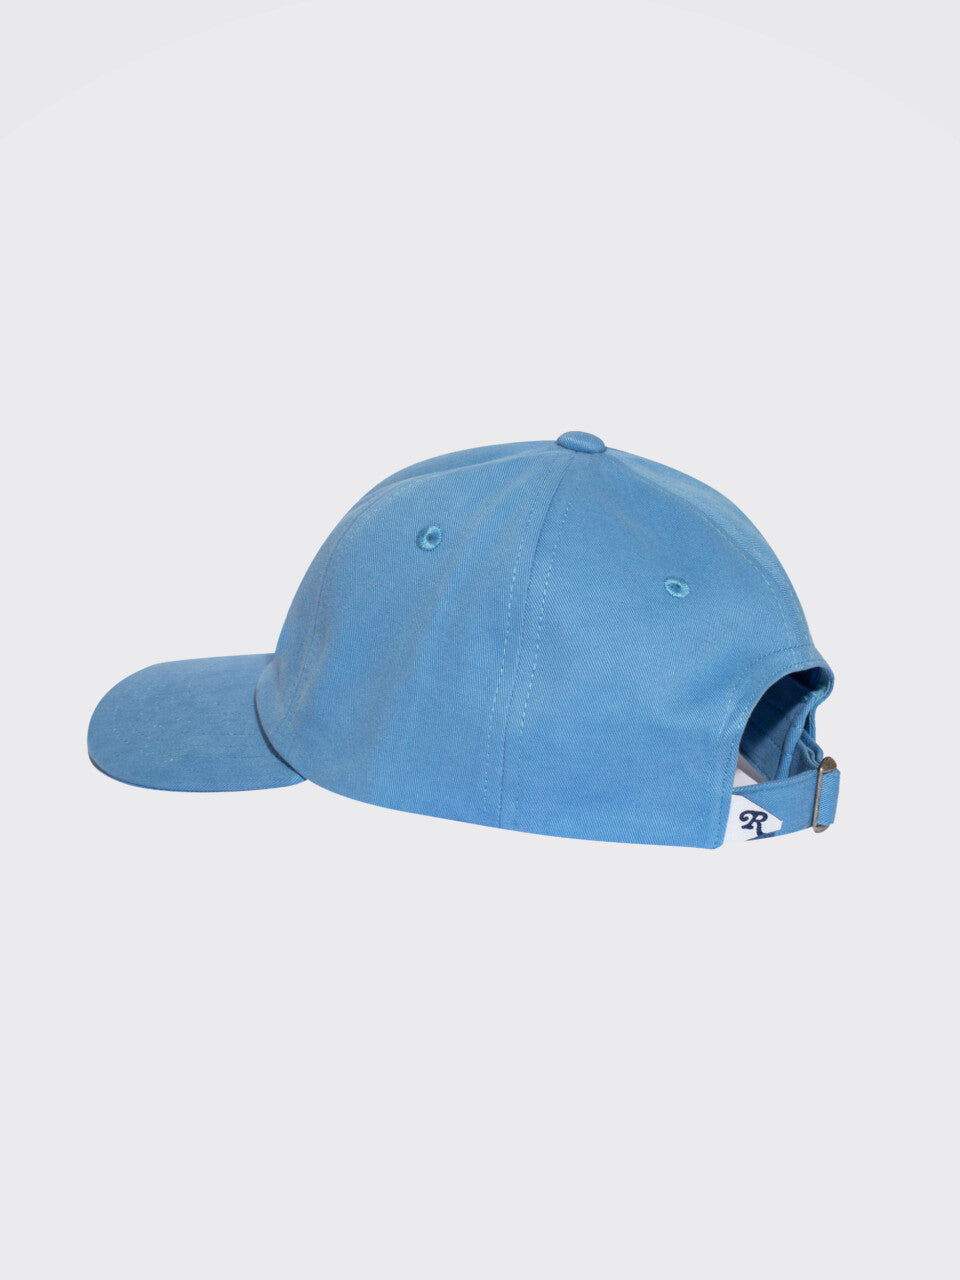 Reception - Hats - Icon - 6 Panel Cap - Granada Blue